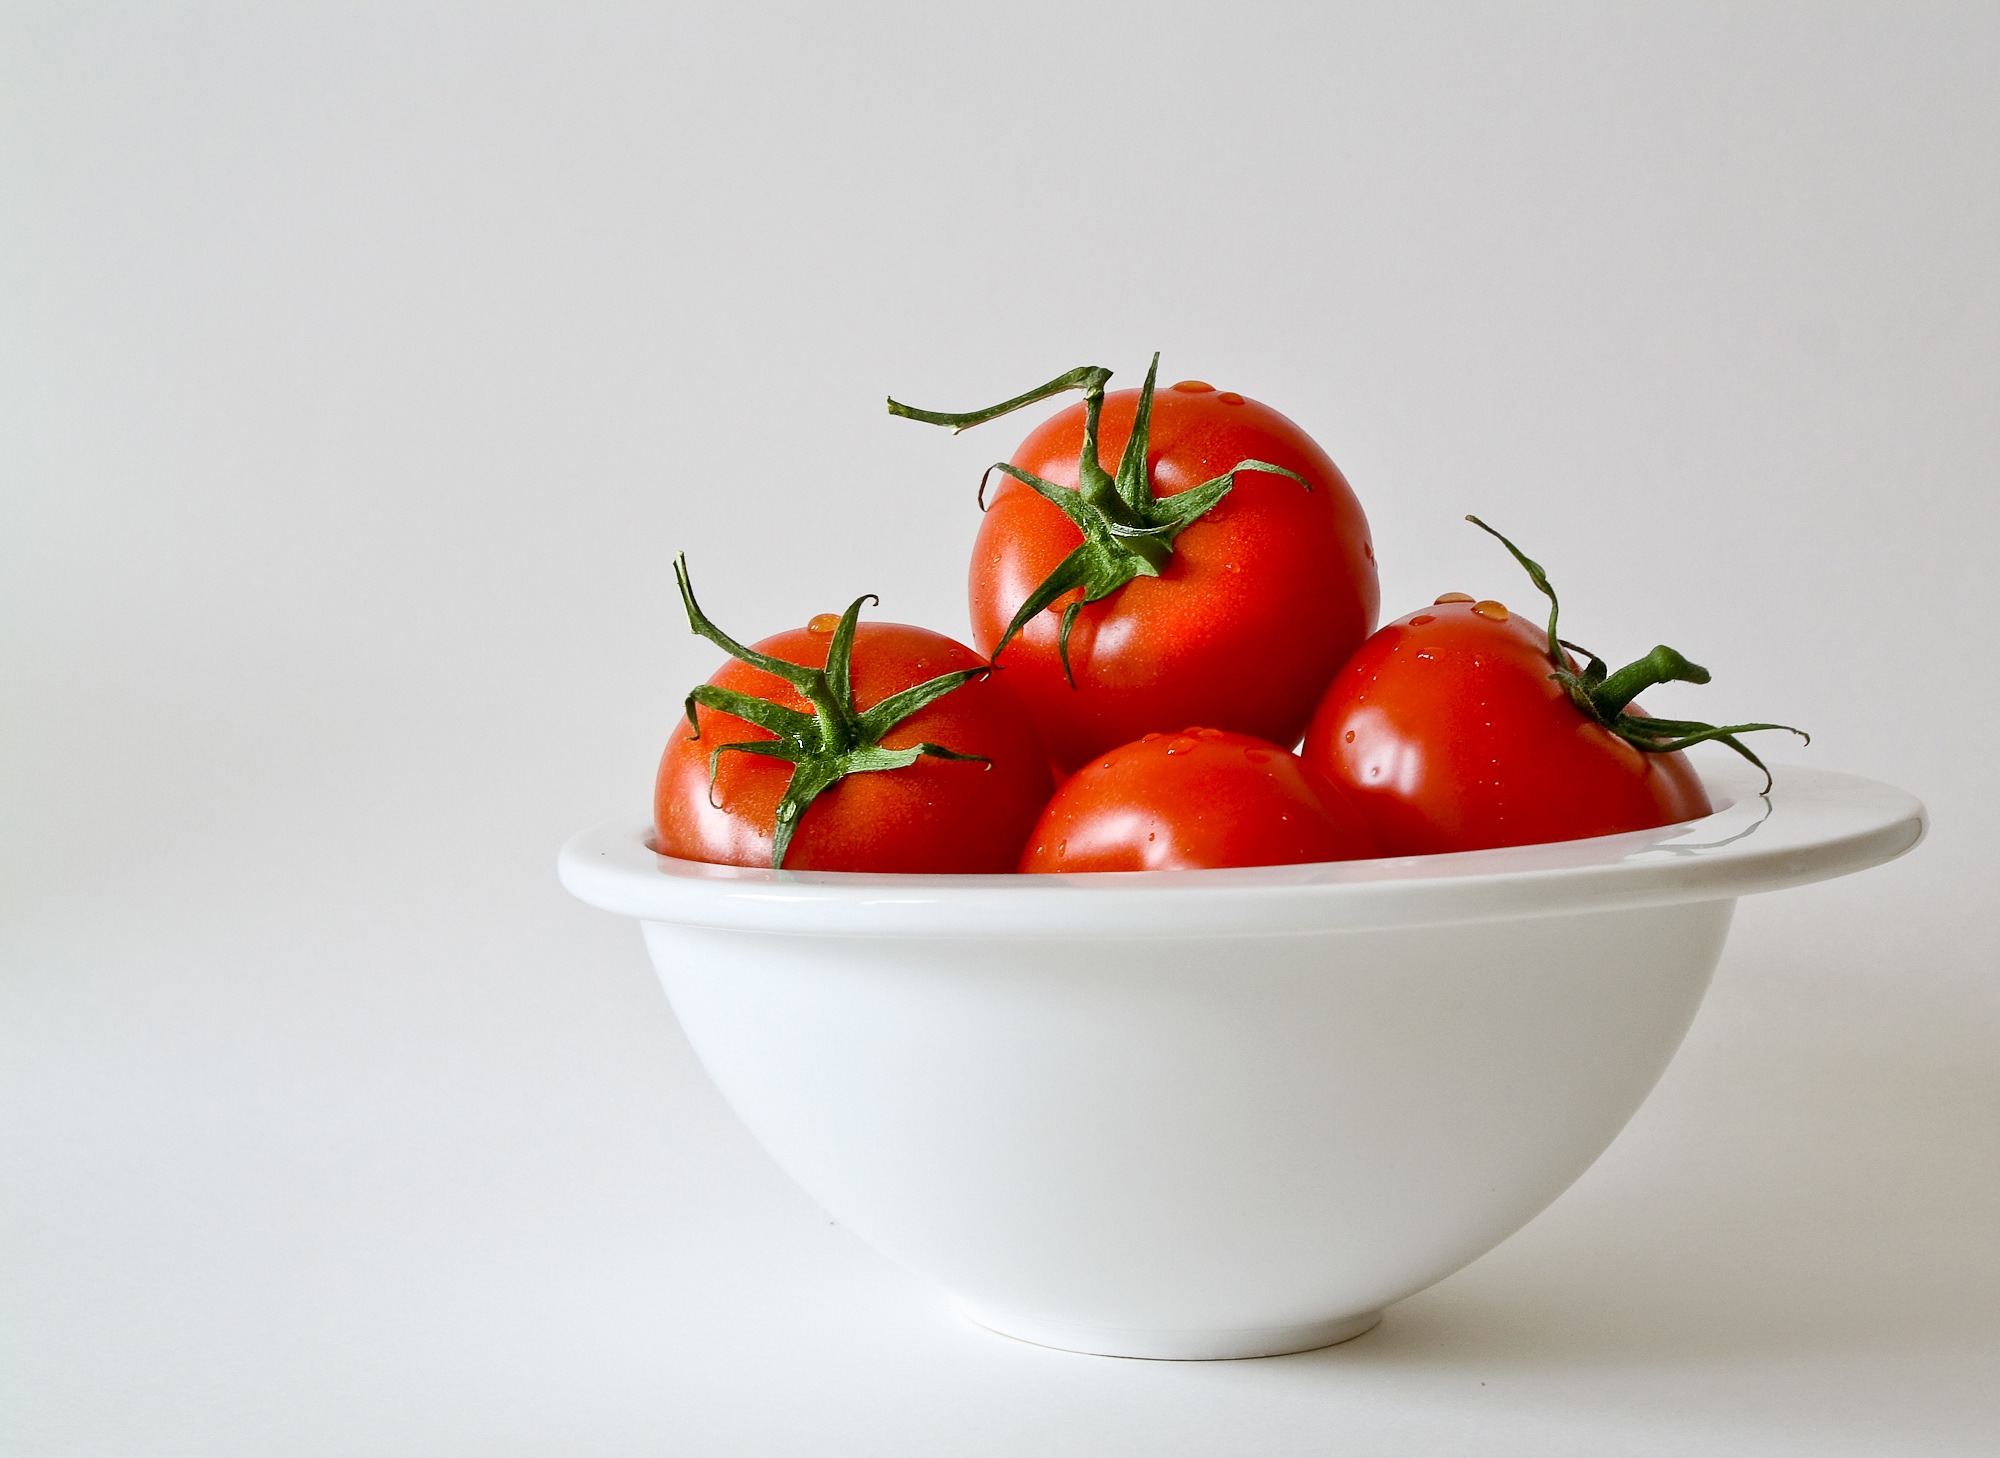 tomatoes, vegetables, food, plate